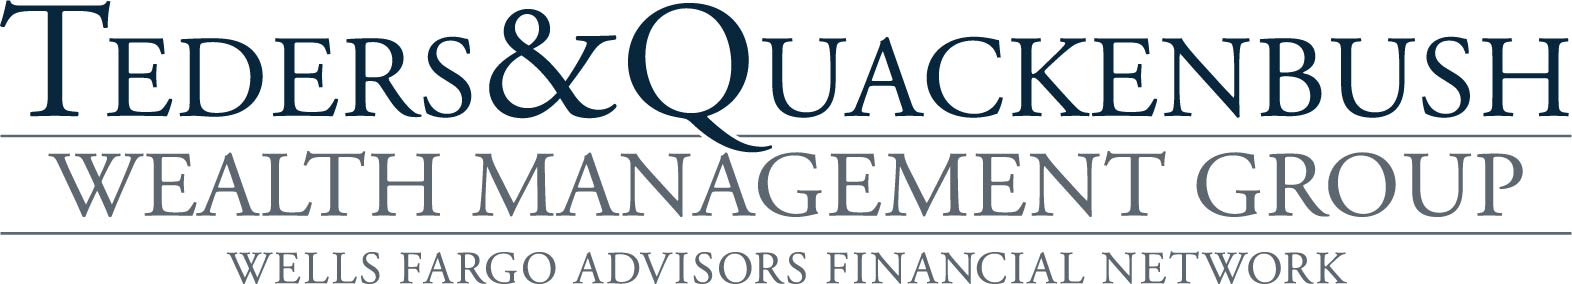 Teders & Quackenbush Wealth Management Group